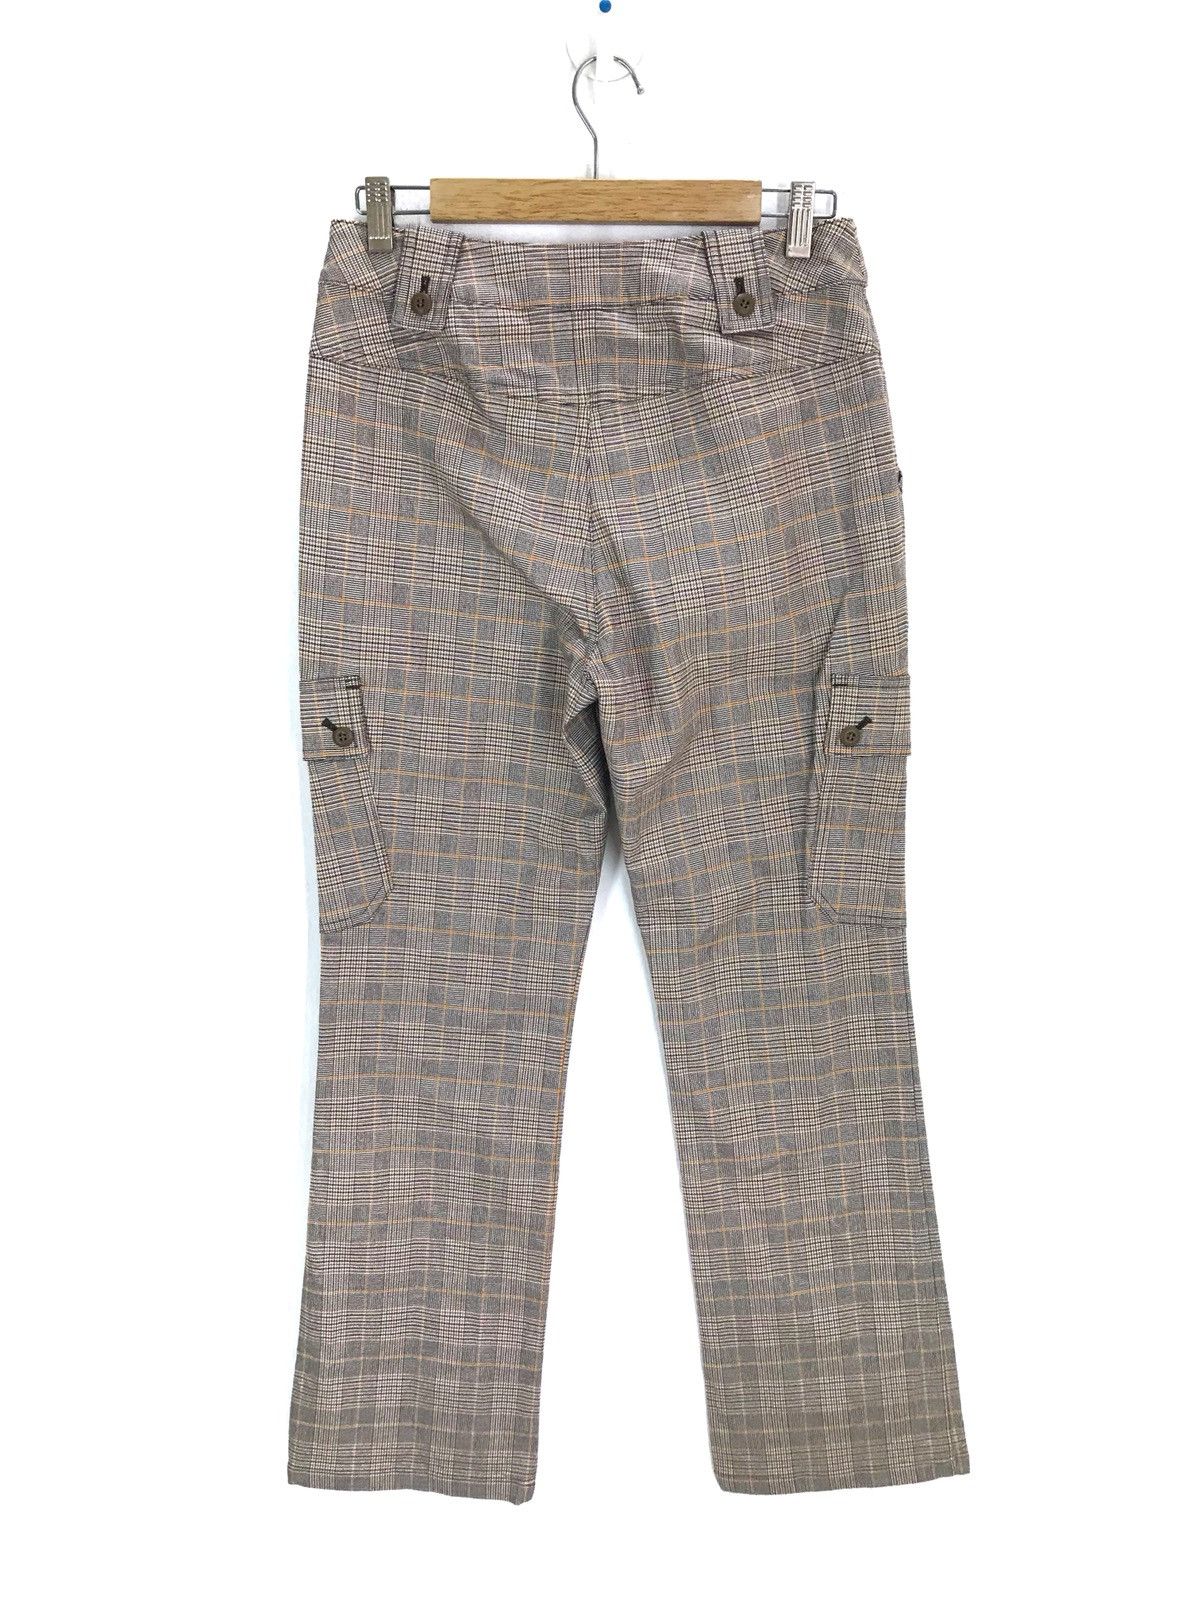 Very Rare Japanese Brand designer Checkered stretchable Cargo Pants Size US 30 / EU 46 - 7 Thumbnail